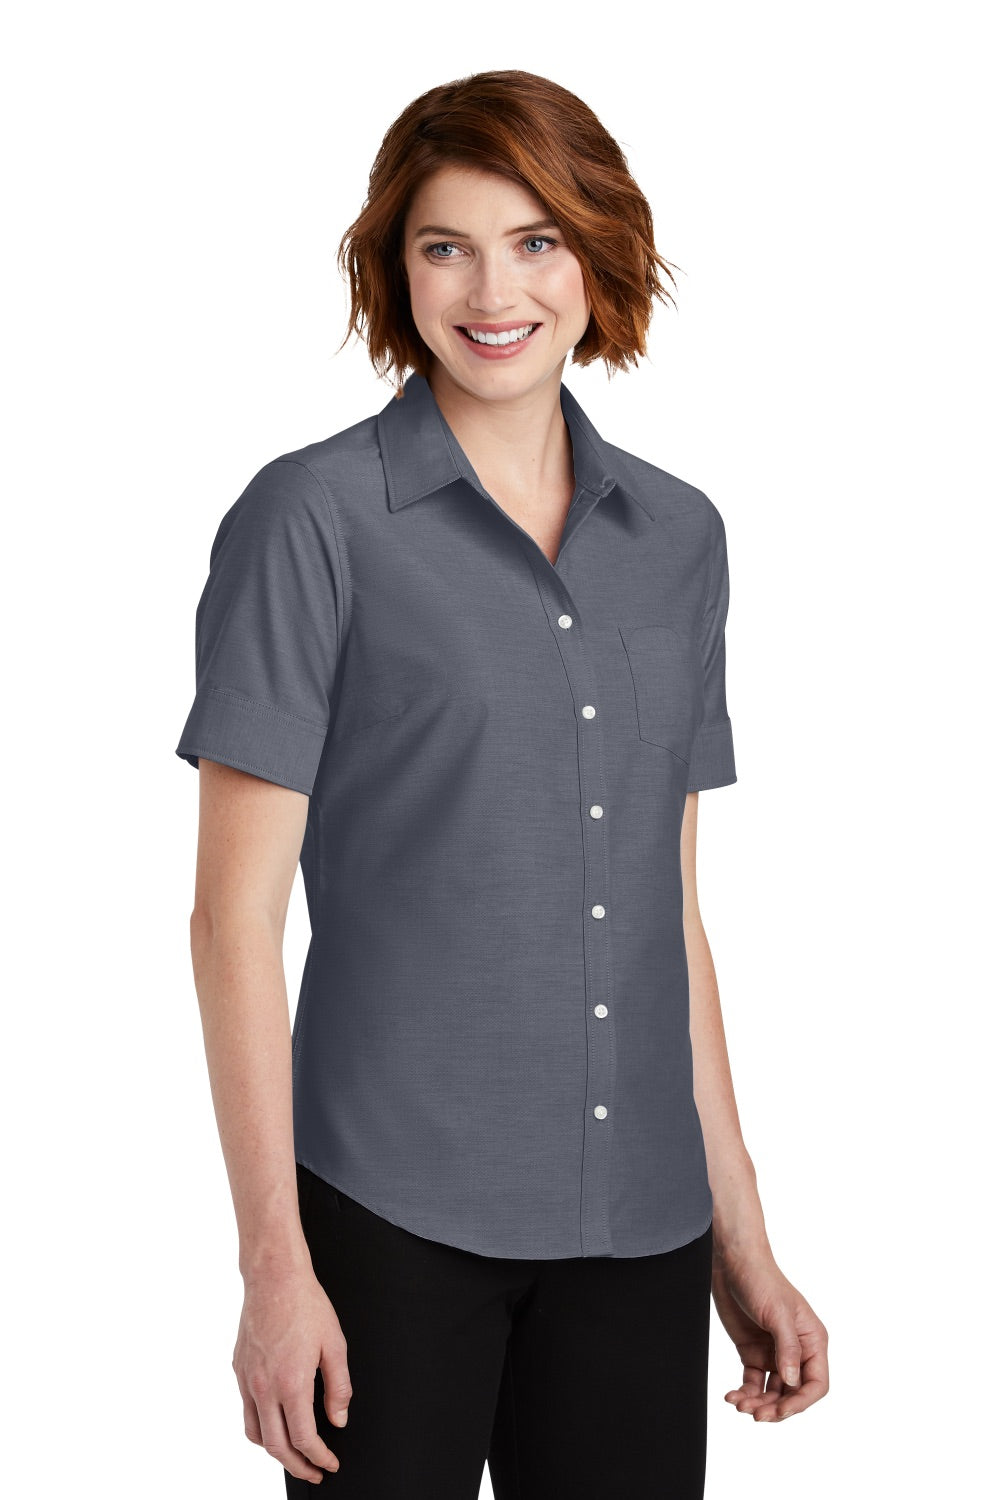 Port Authority L659 Womens SuperPro Oxford Wrinkle Resistant Short Sleeve Button Down Shirt w/ Pocket Black 3Q